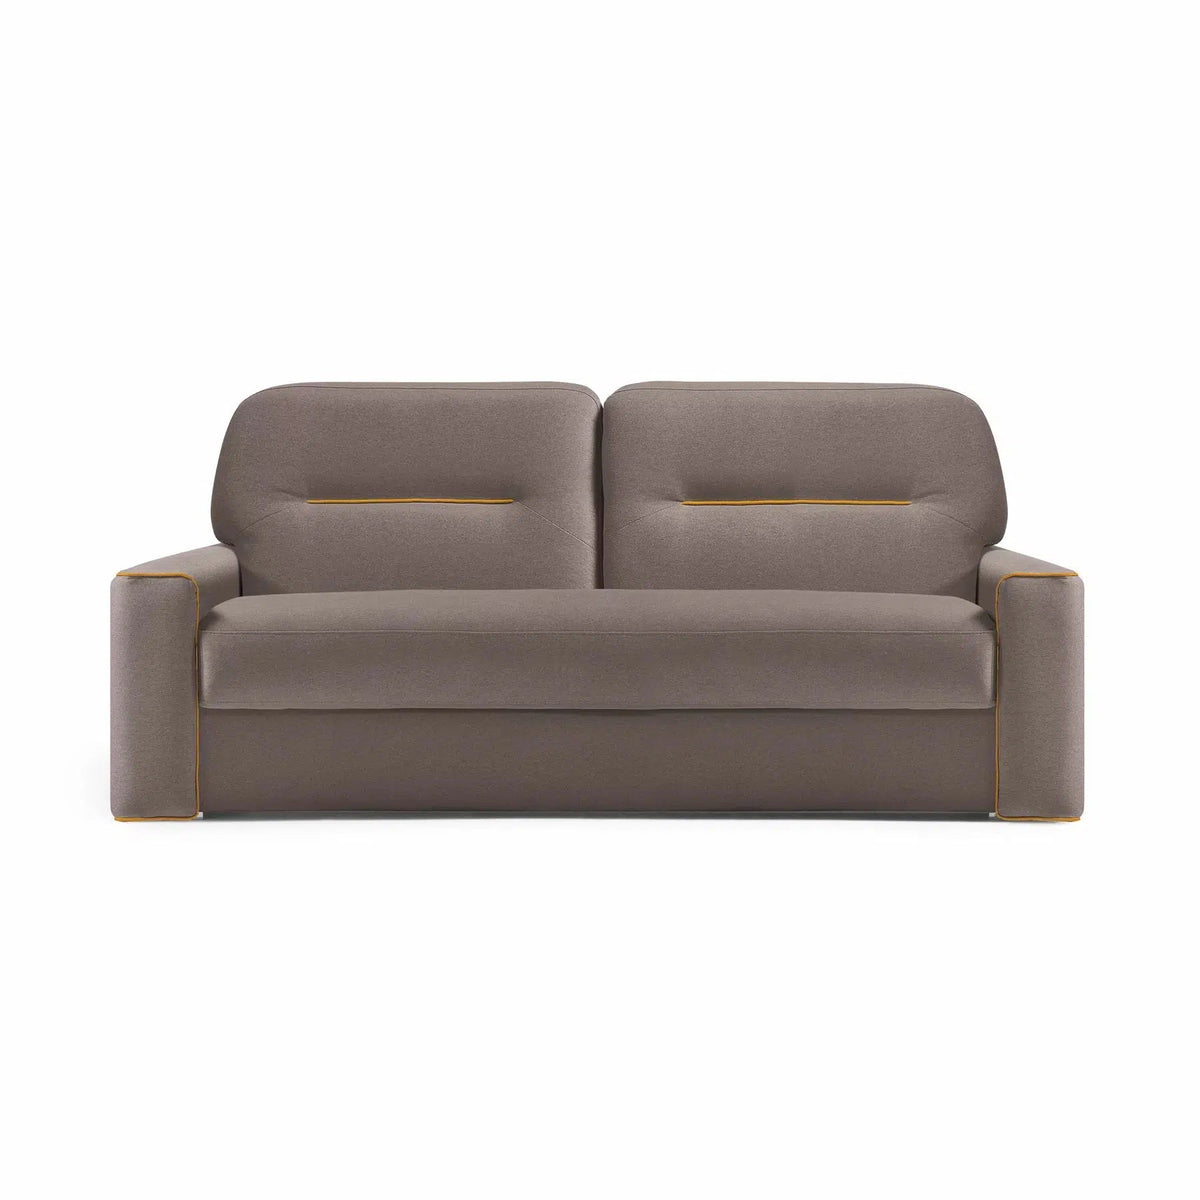 Lambo 953 Sofa Bed-TM Leader-Contract Furniture Store